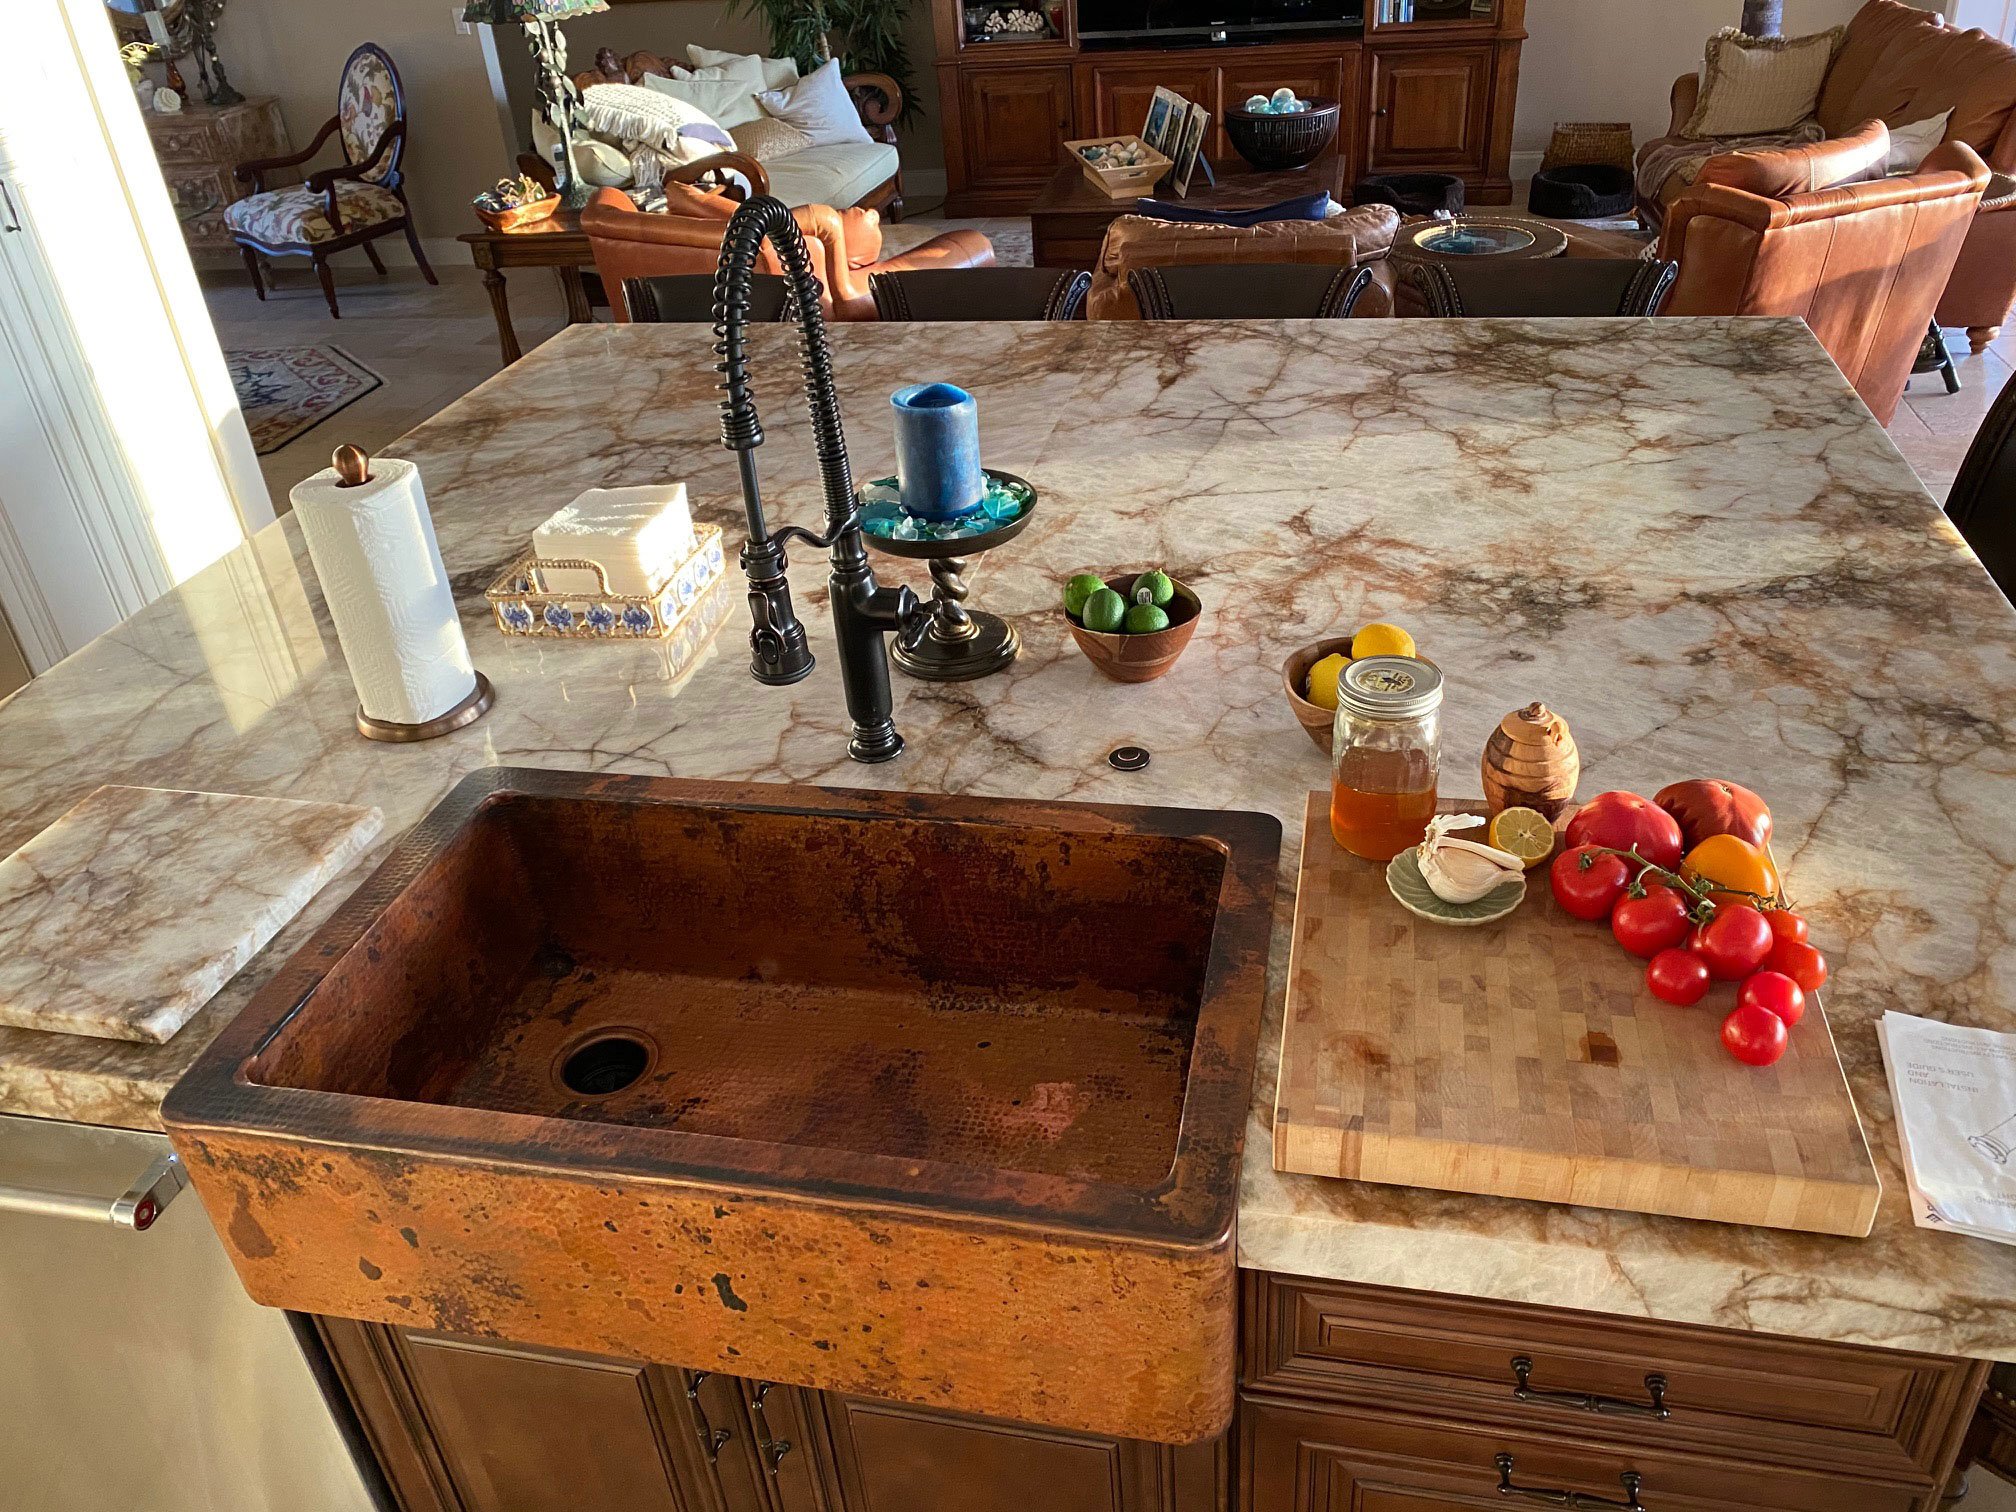 Kitchen design with classical kitchen sink idea, beown kitchen cabinets and marble kitchen countertops brick backsplash